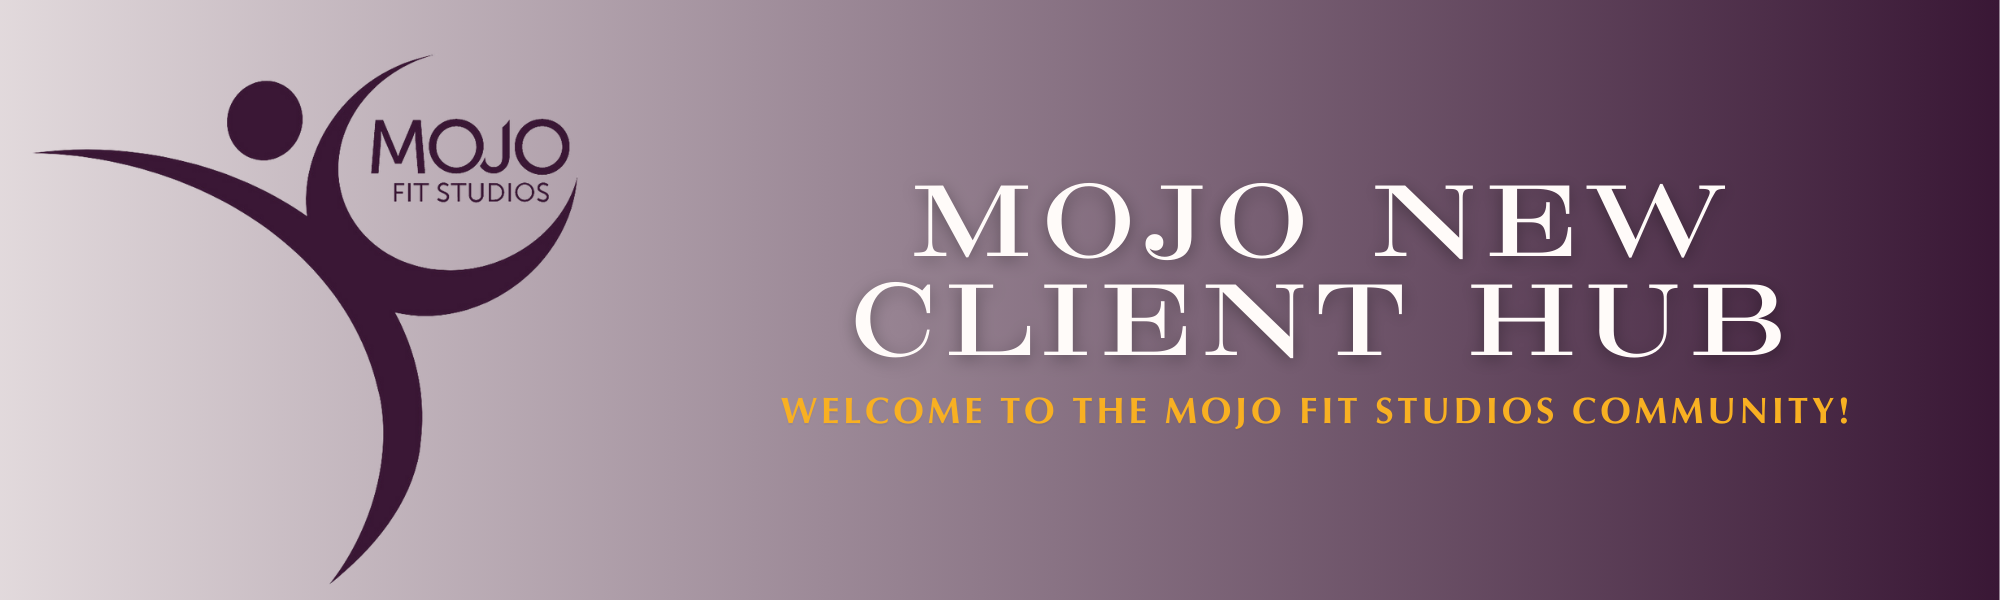 Mojo New Client Hub.png